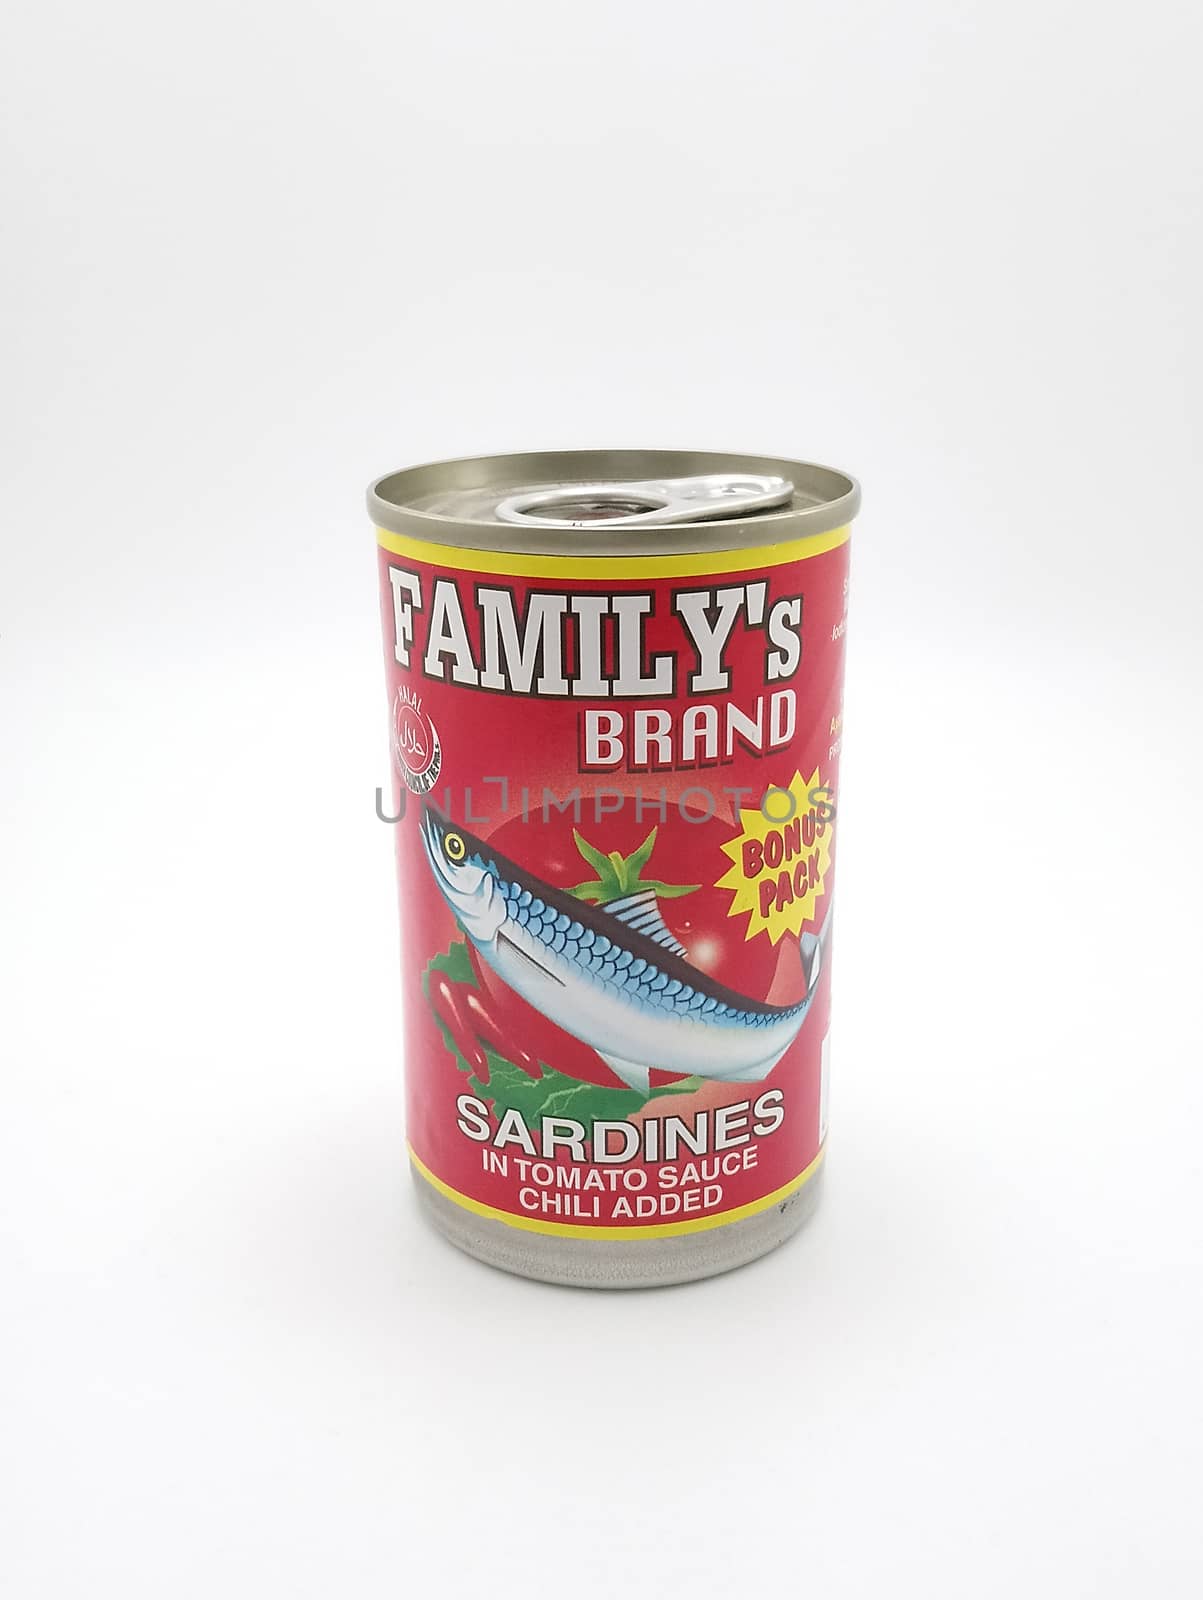 MANILA, PH - SEPT 25 - Familys brand sardines in tomato sauce with chili on September 25, 2020 in Manila, Philippines.